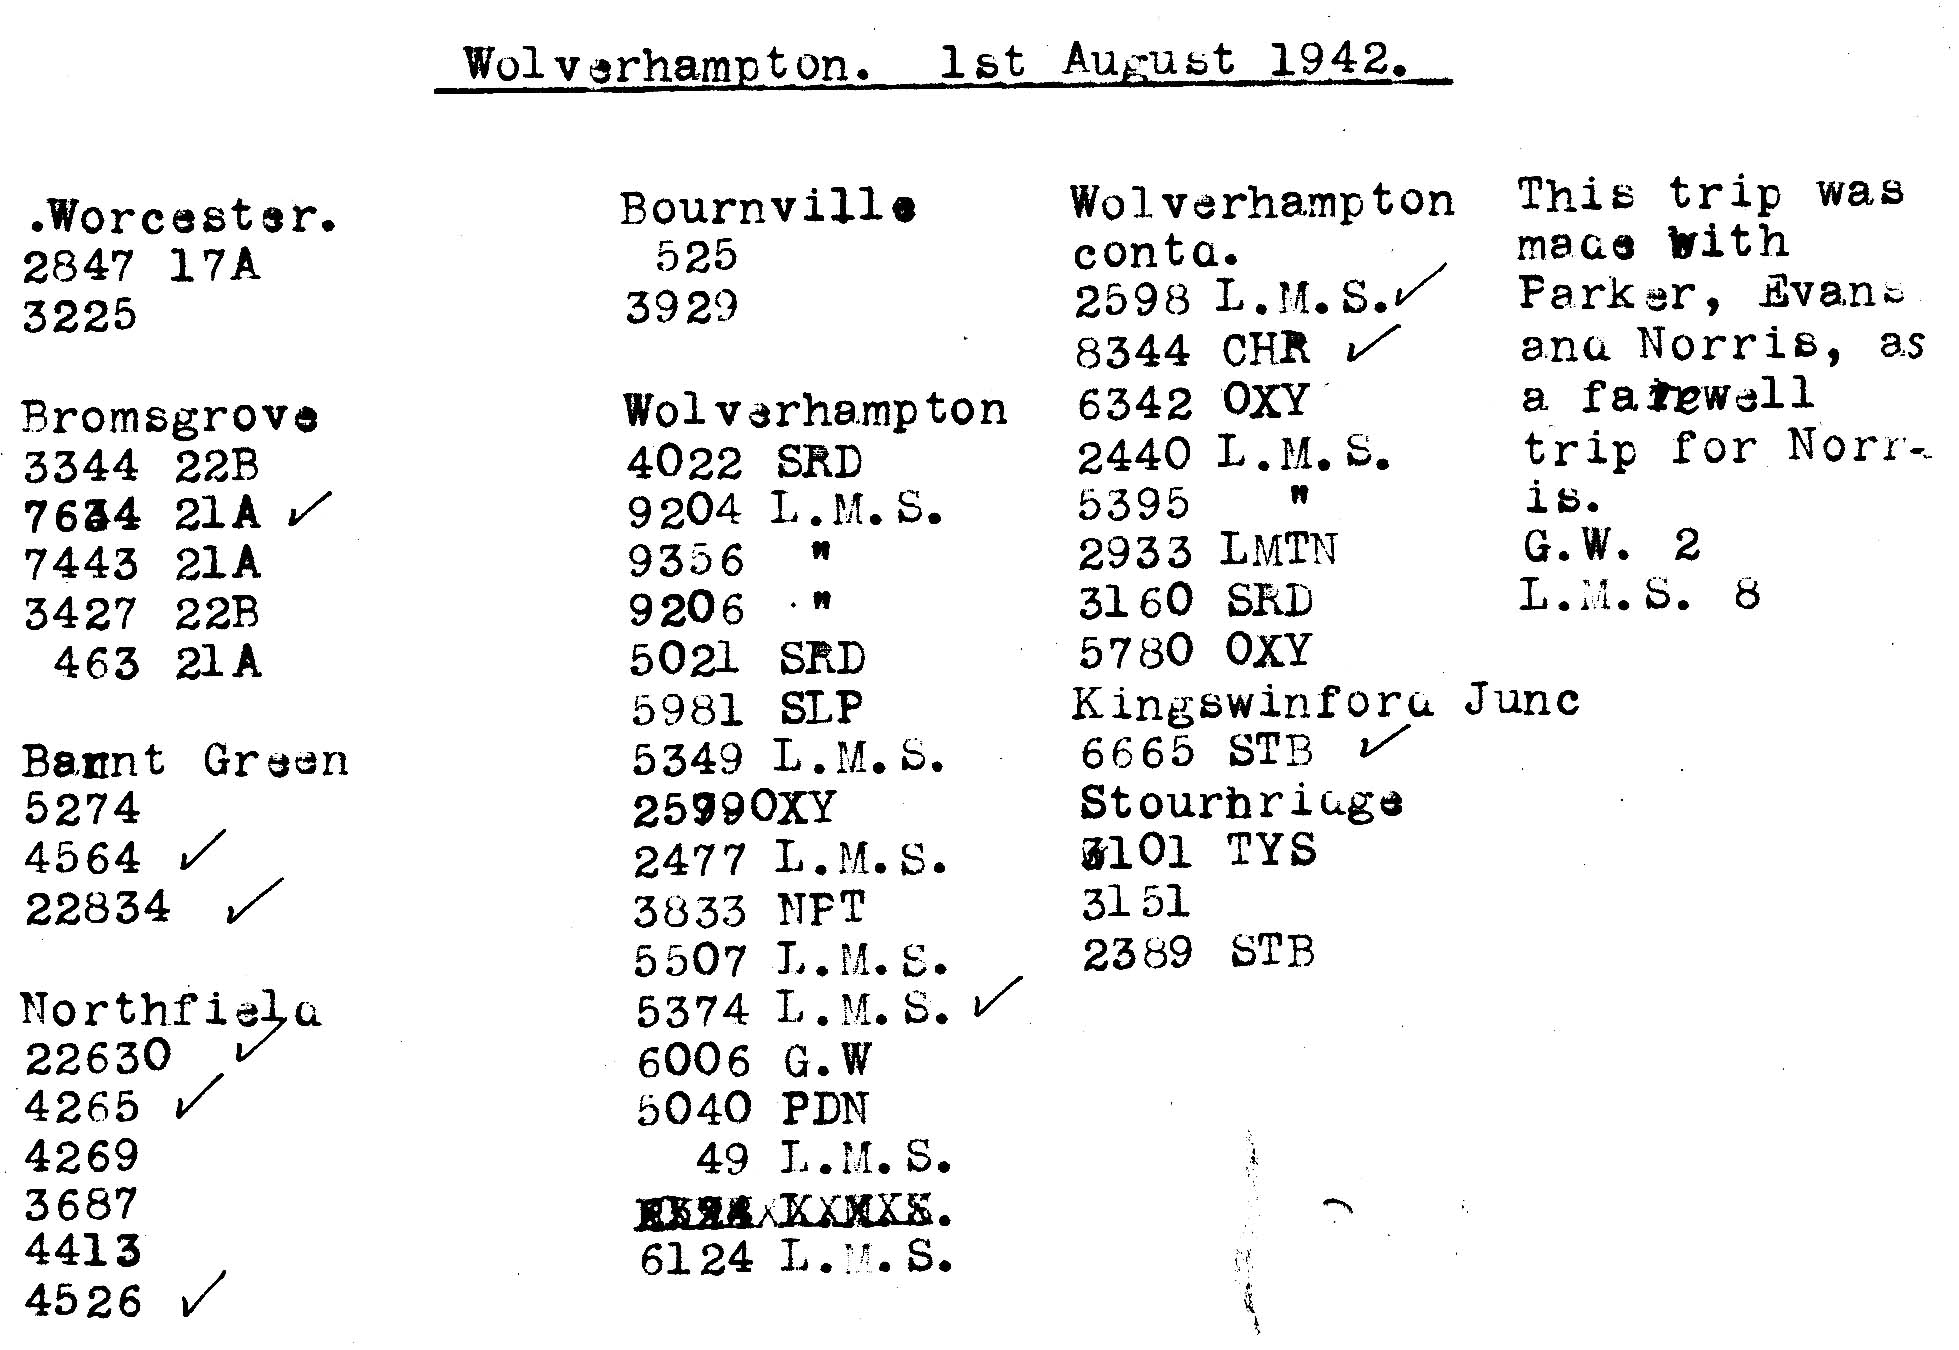 1st August 1942 - Trip to Wolverhampton.